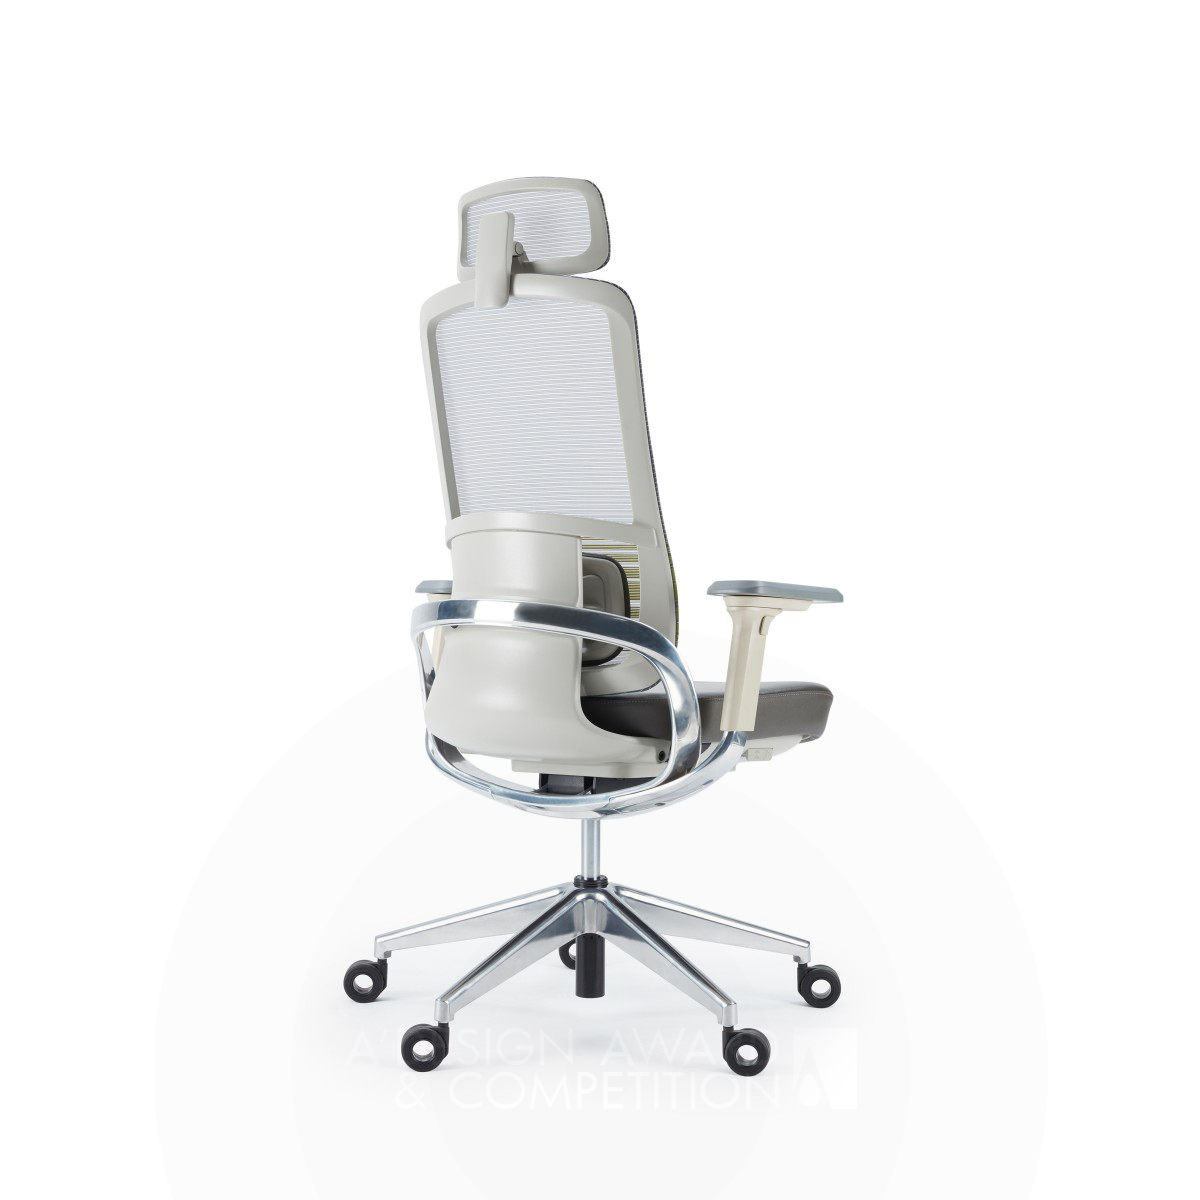 Hip Office chair